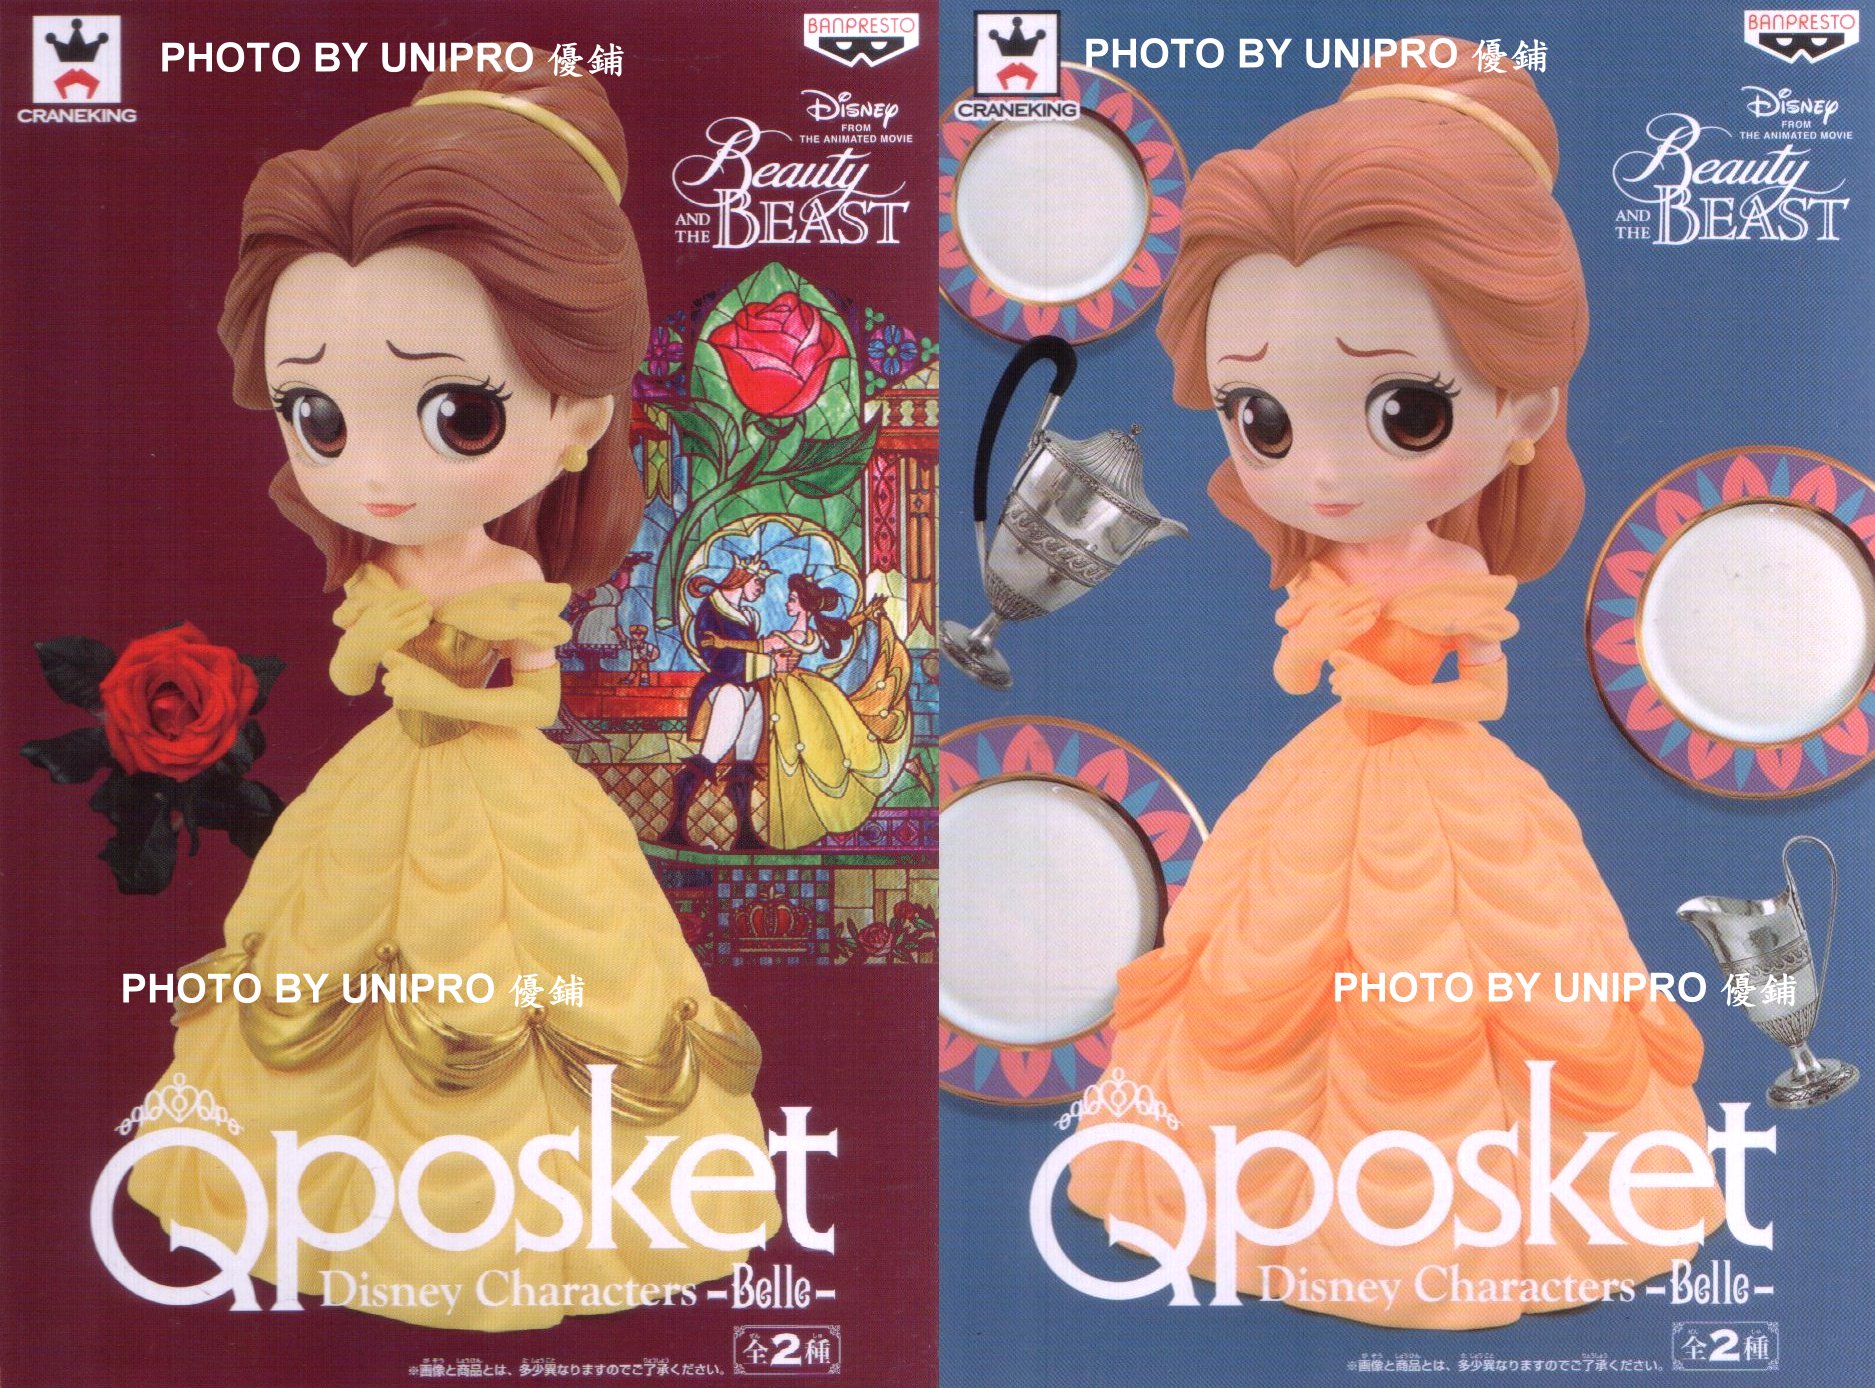 日版 Q Posket 美女與野獸 貝兒 一套兩款 迪士尼 Beauty and the Beast Qposket Disney Characters －Belle－ 公仔